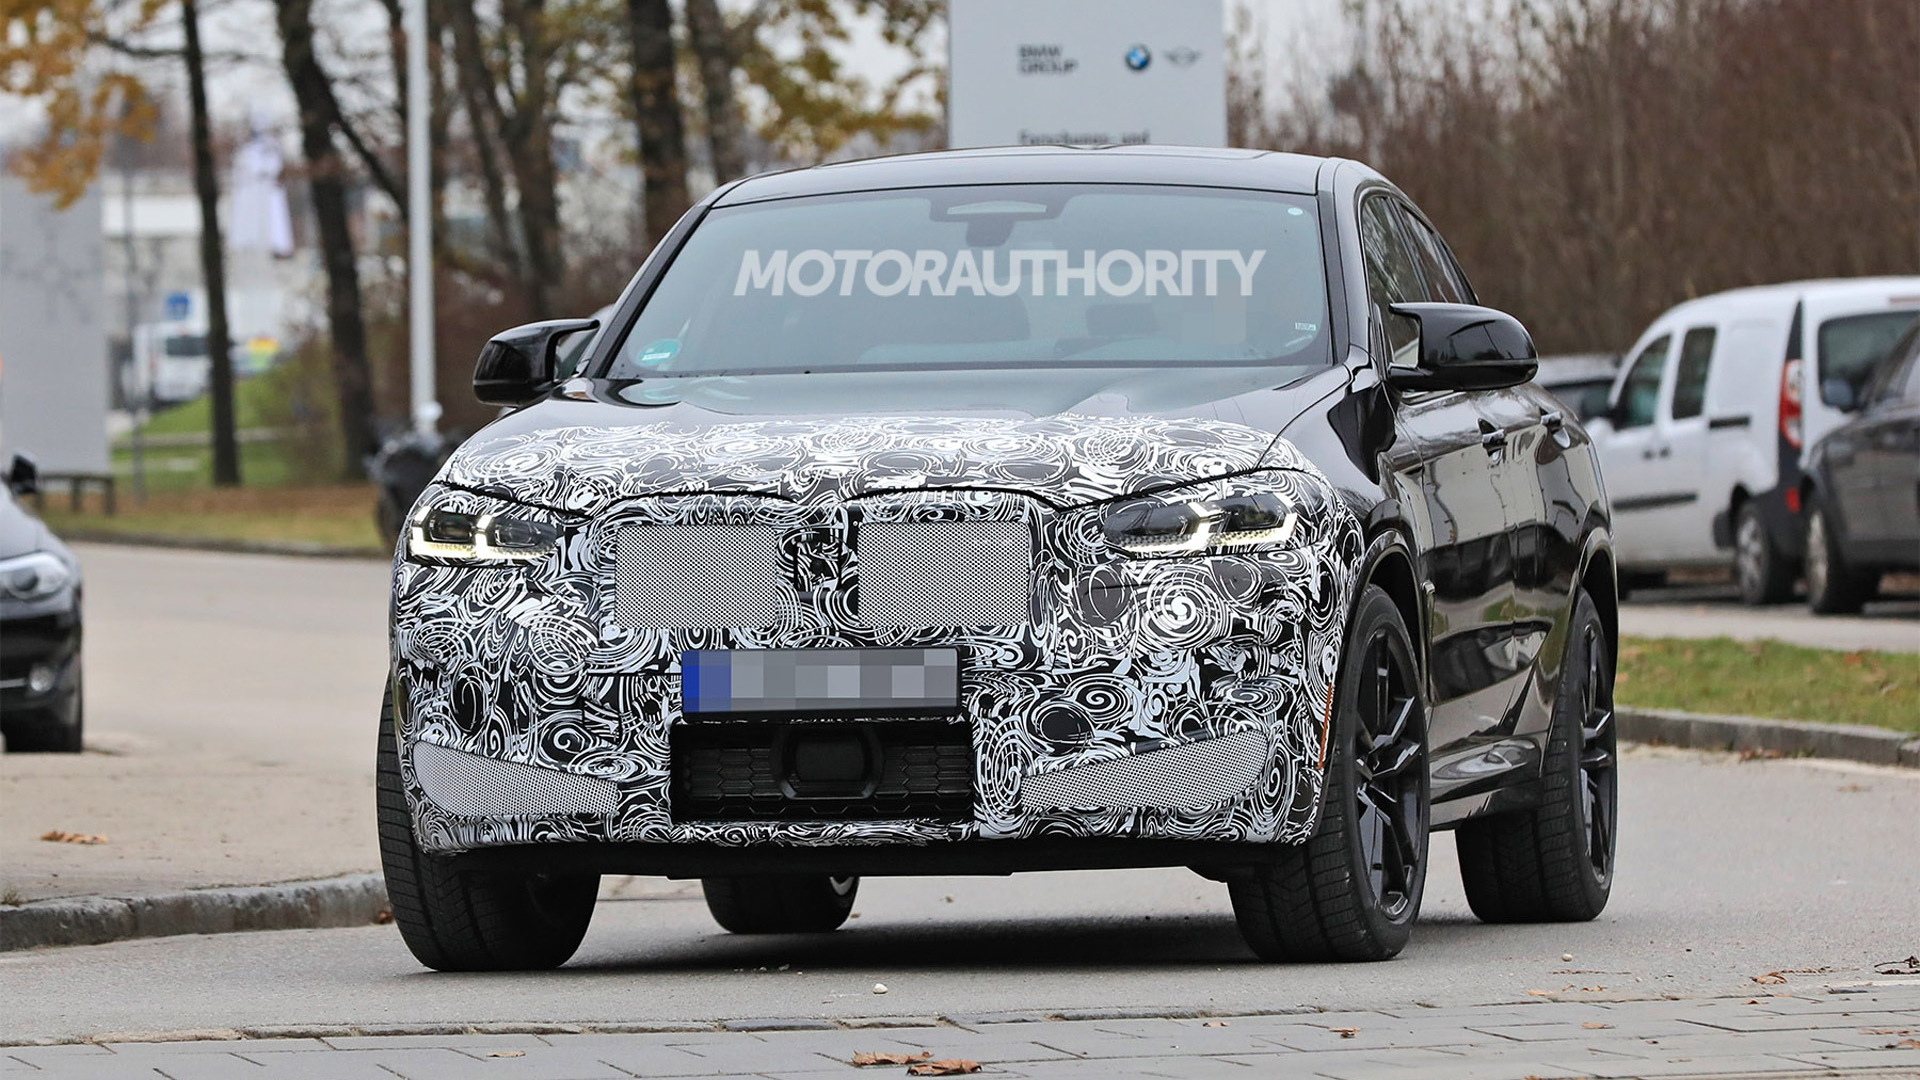 2022 BMW X4 M facelift spy shots - Photo credit: S. Baldauf/SB-Medien